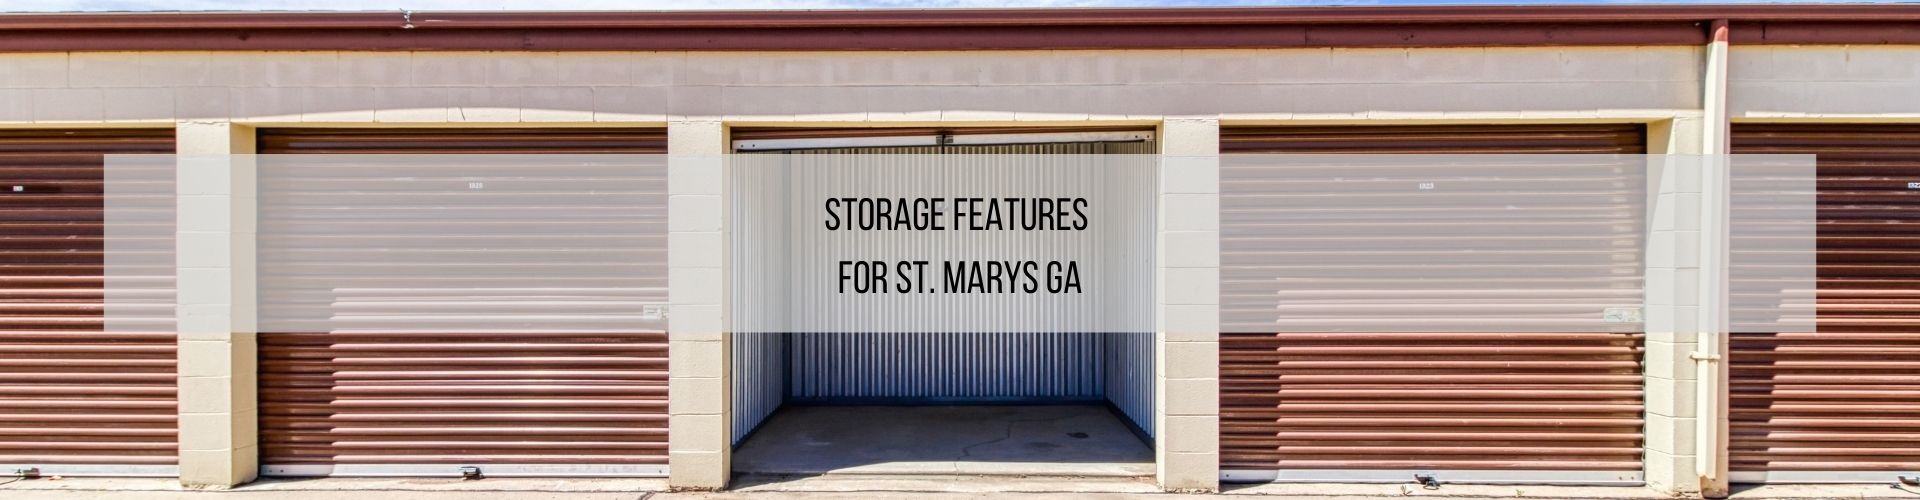 Storage Features St marys GA